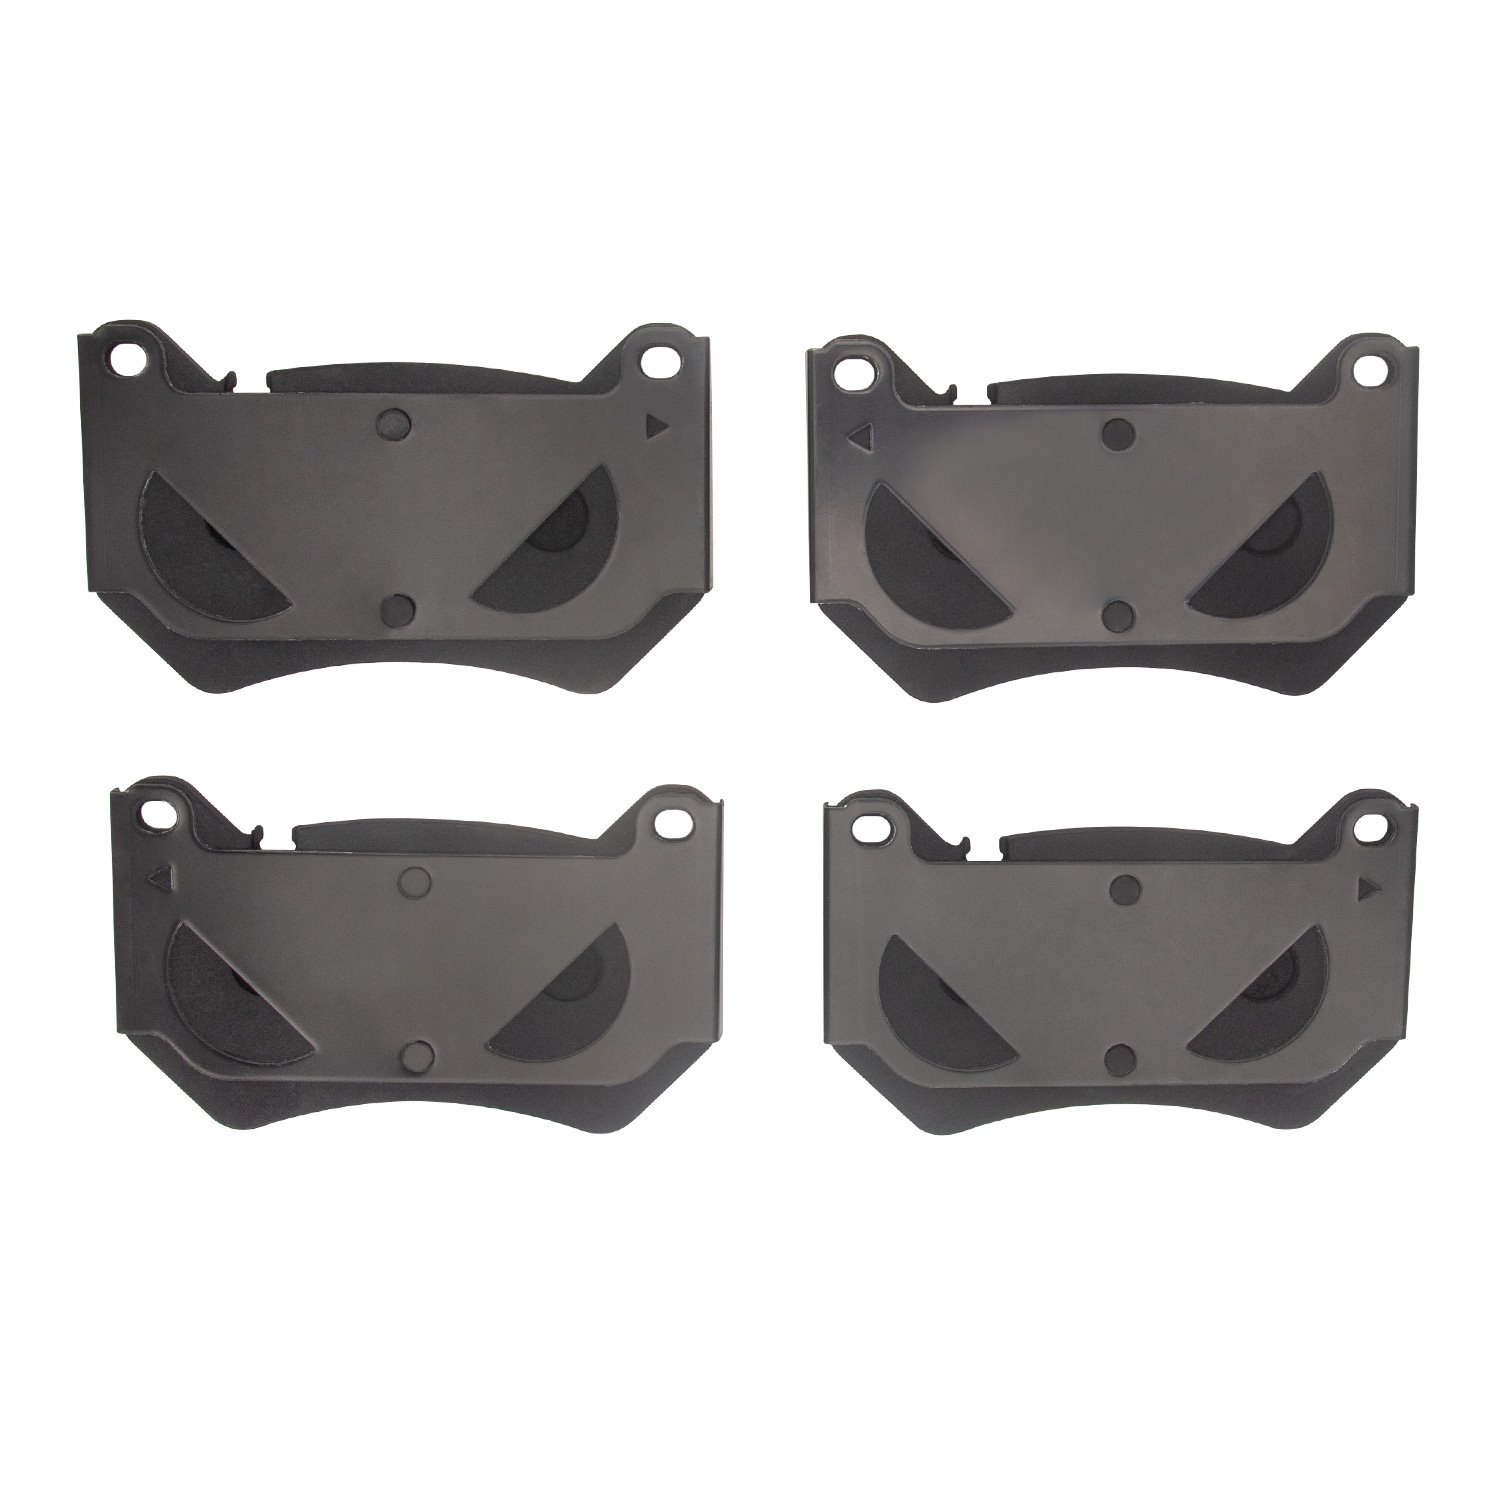 1551-2139-00 5000 Advanced Ceramic Brake Pads, Fits Select Audi/Volkswagen, Position: Front